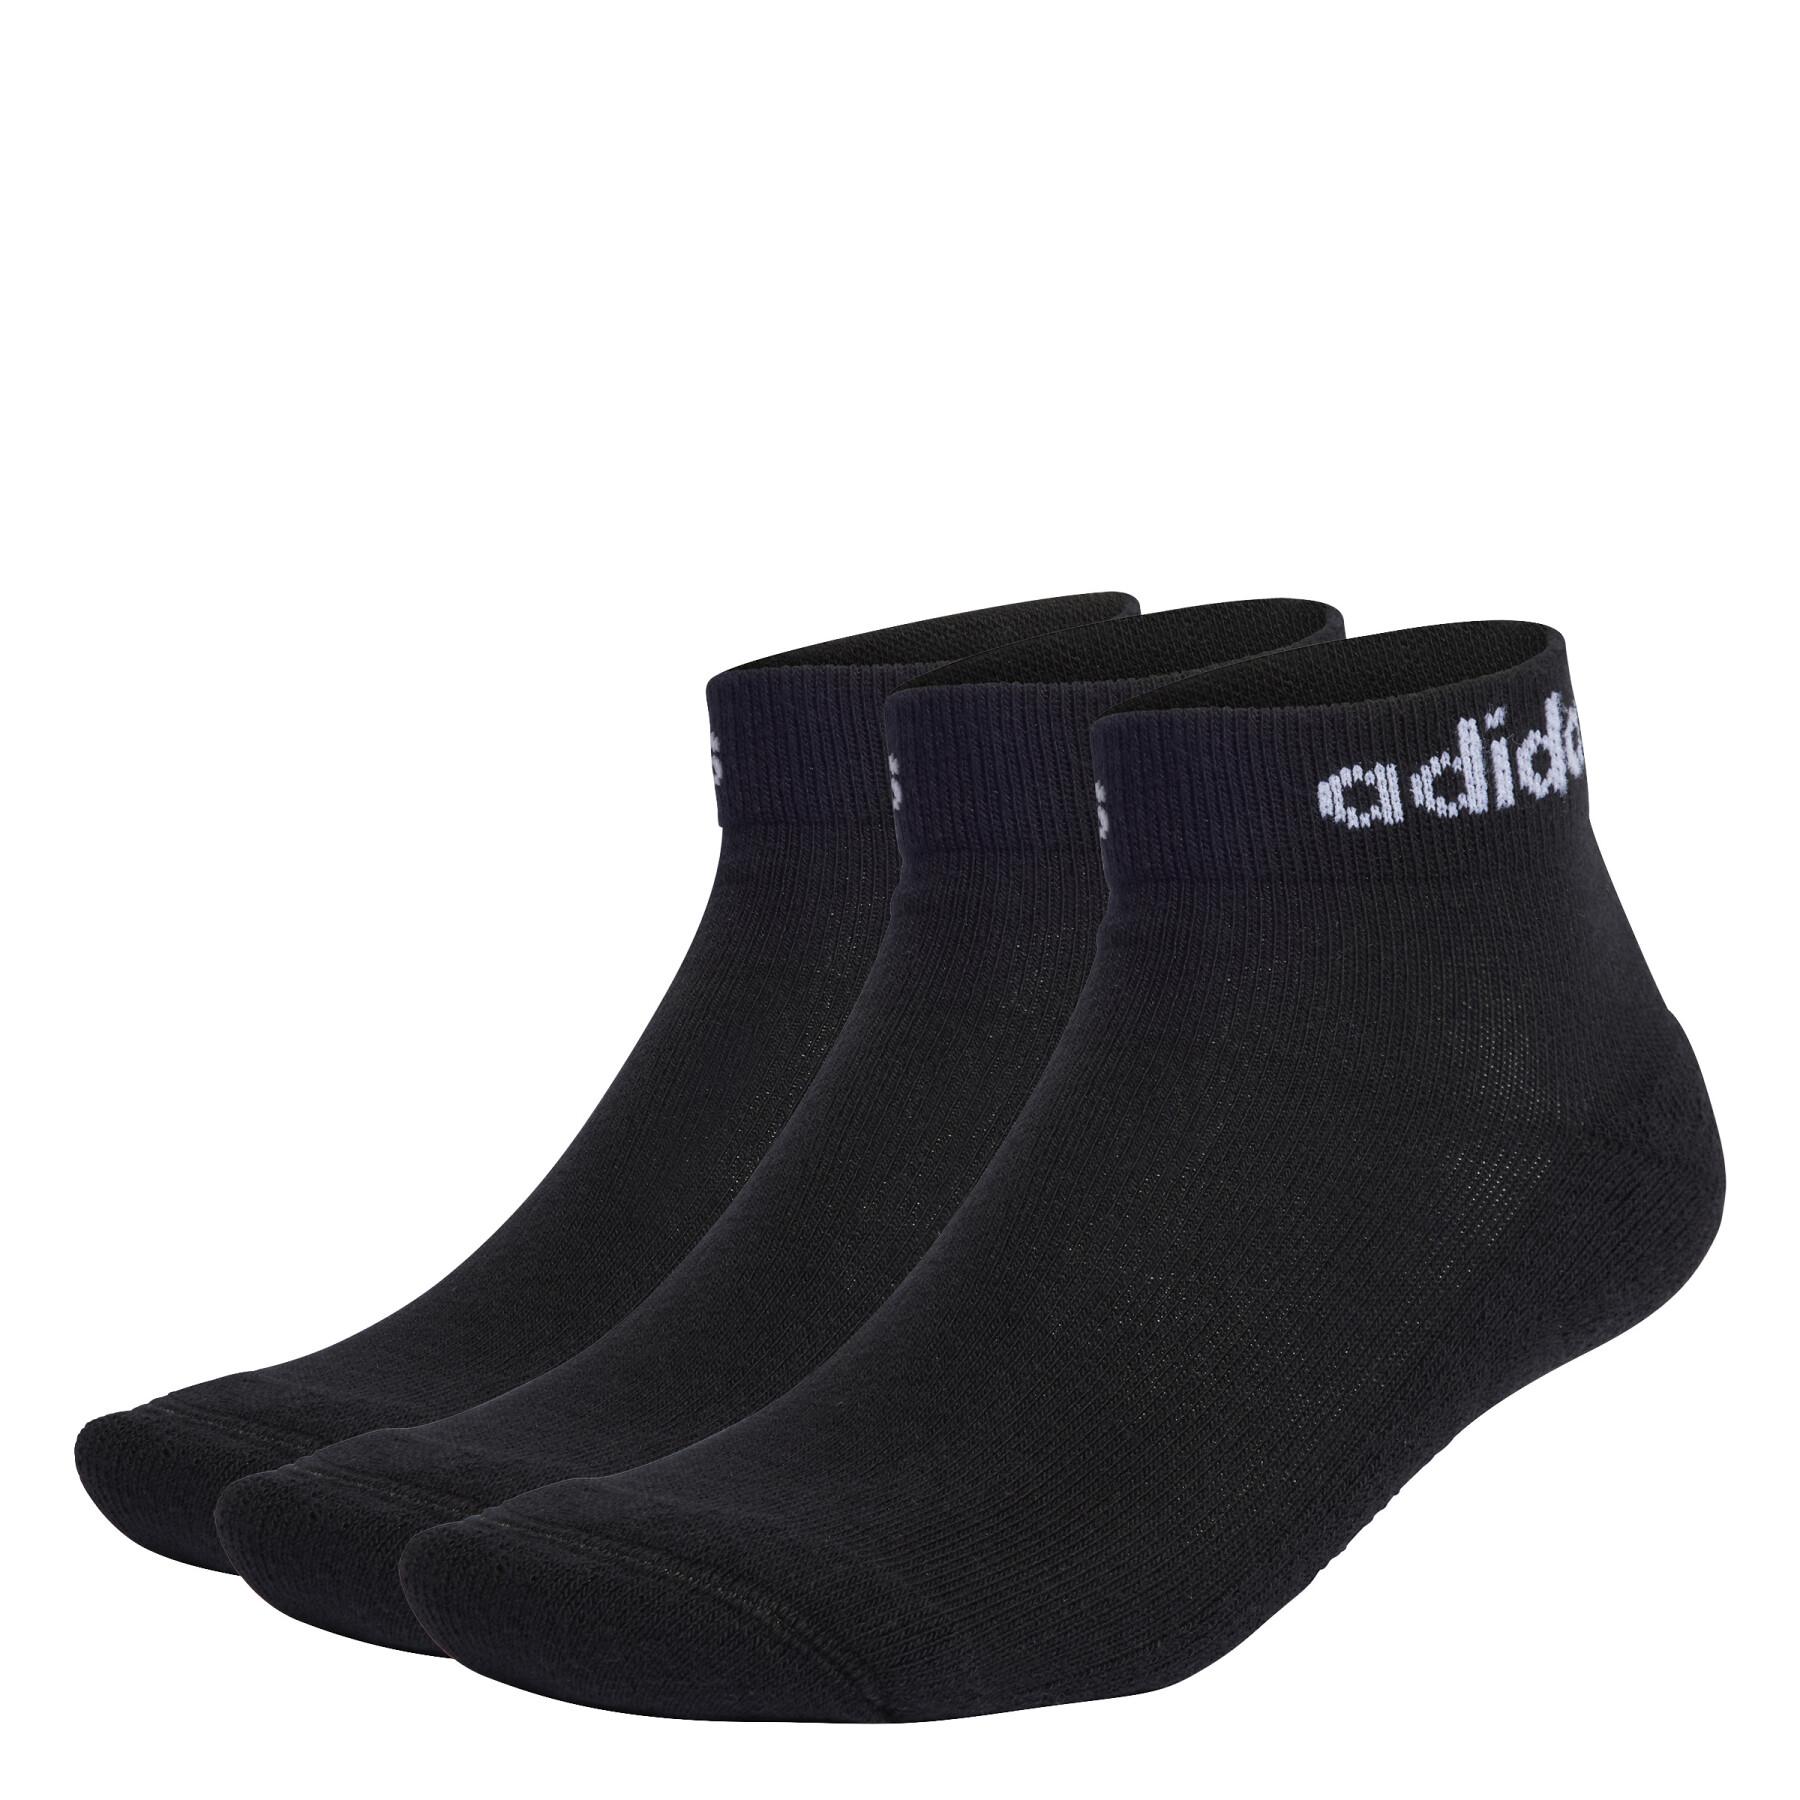 Children's socks adidas (x3)